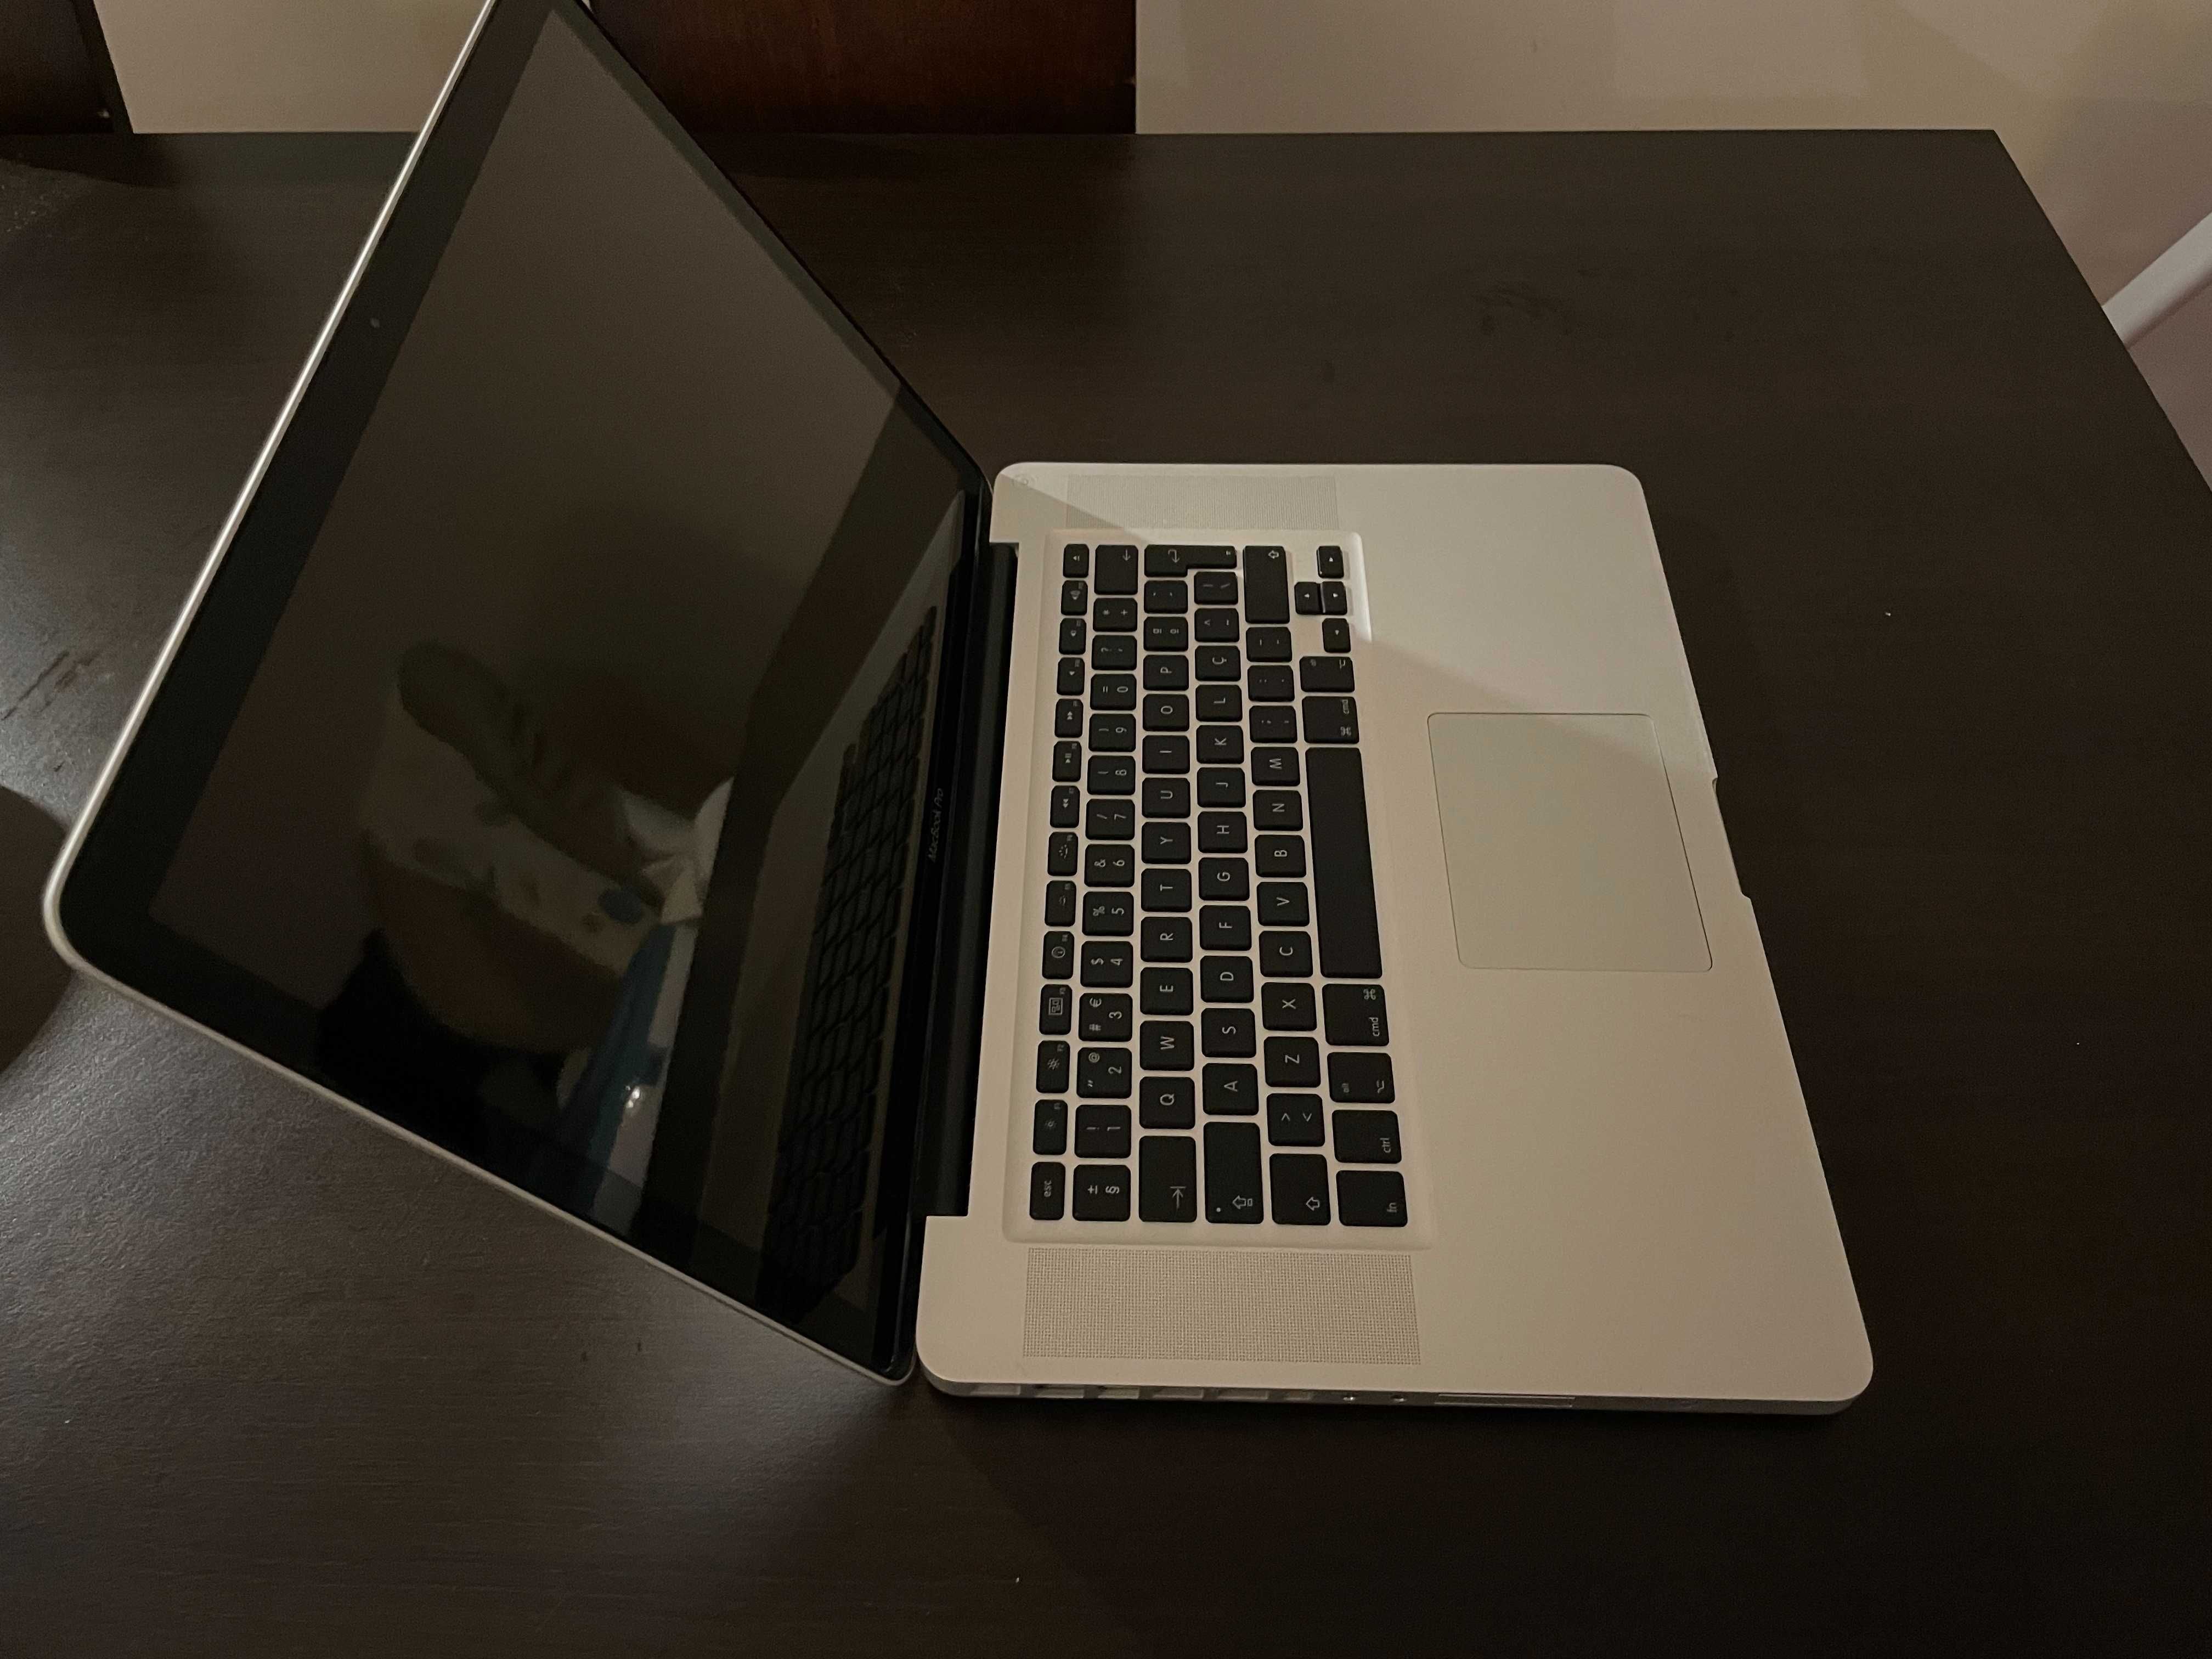 MacBook Pro 15” late 2008 (Upgraded)